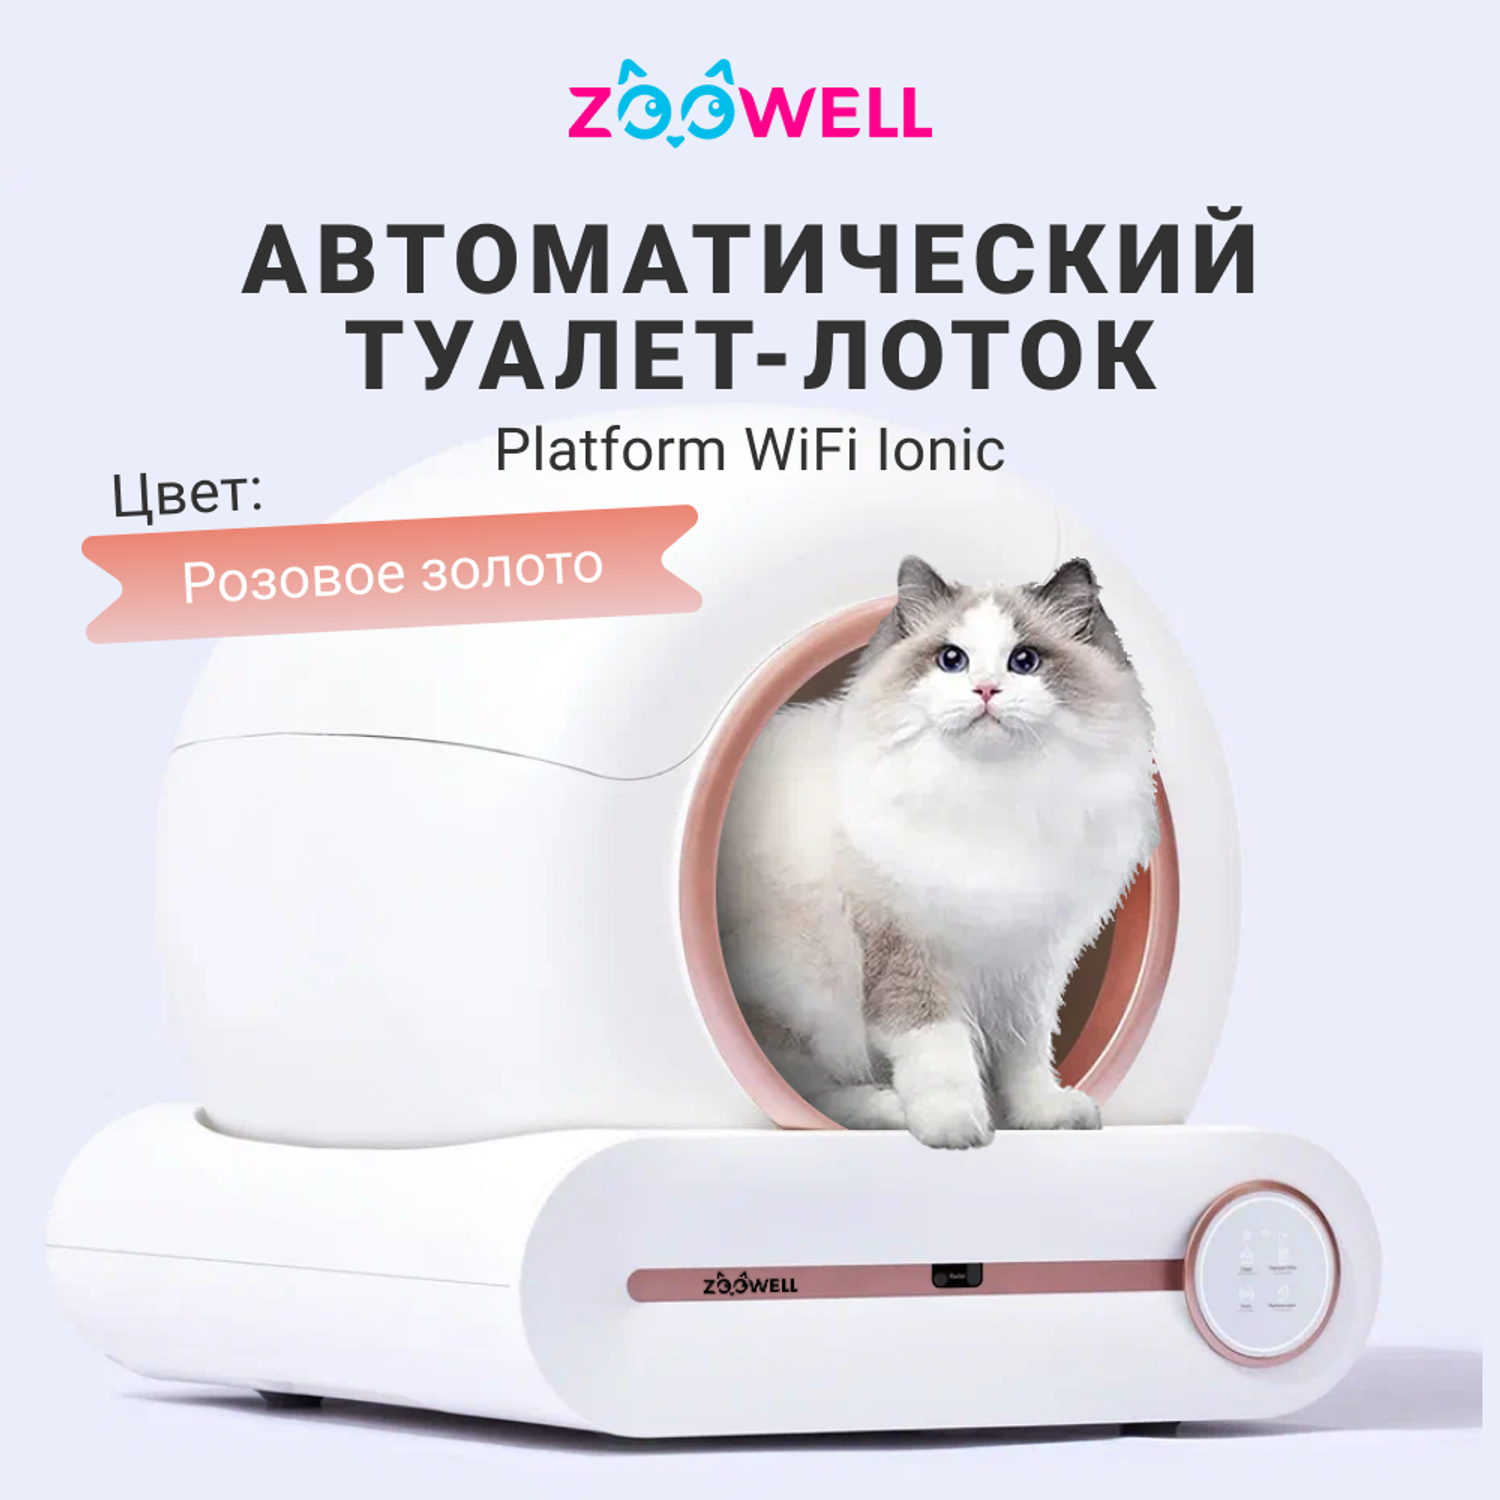 Автоматический туалет ZDK ZooWell Platform WiFi Ionic для кошек розовое золото - фото 1